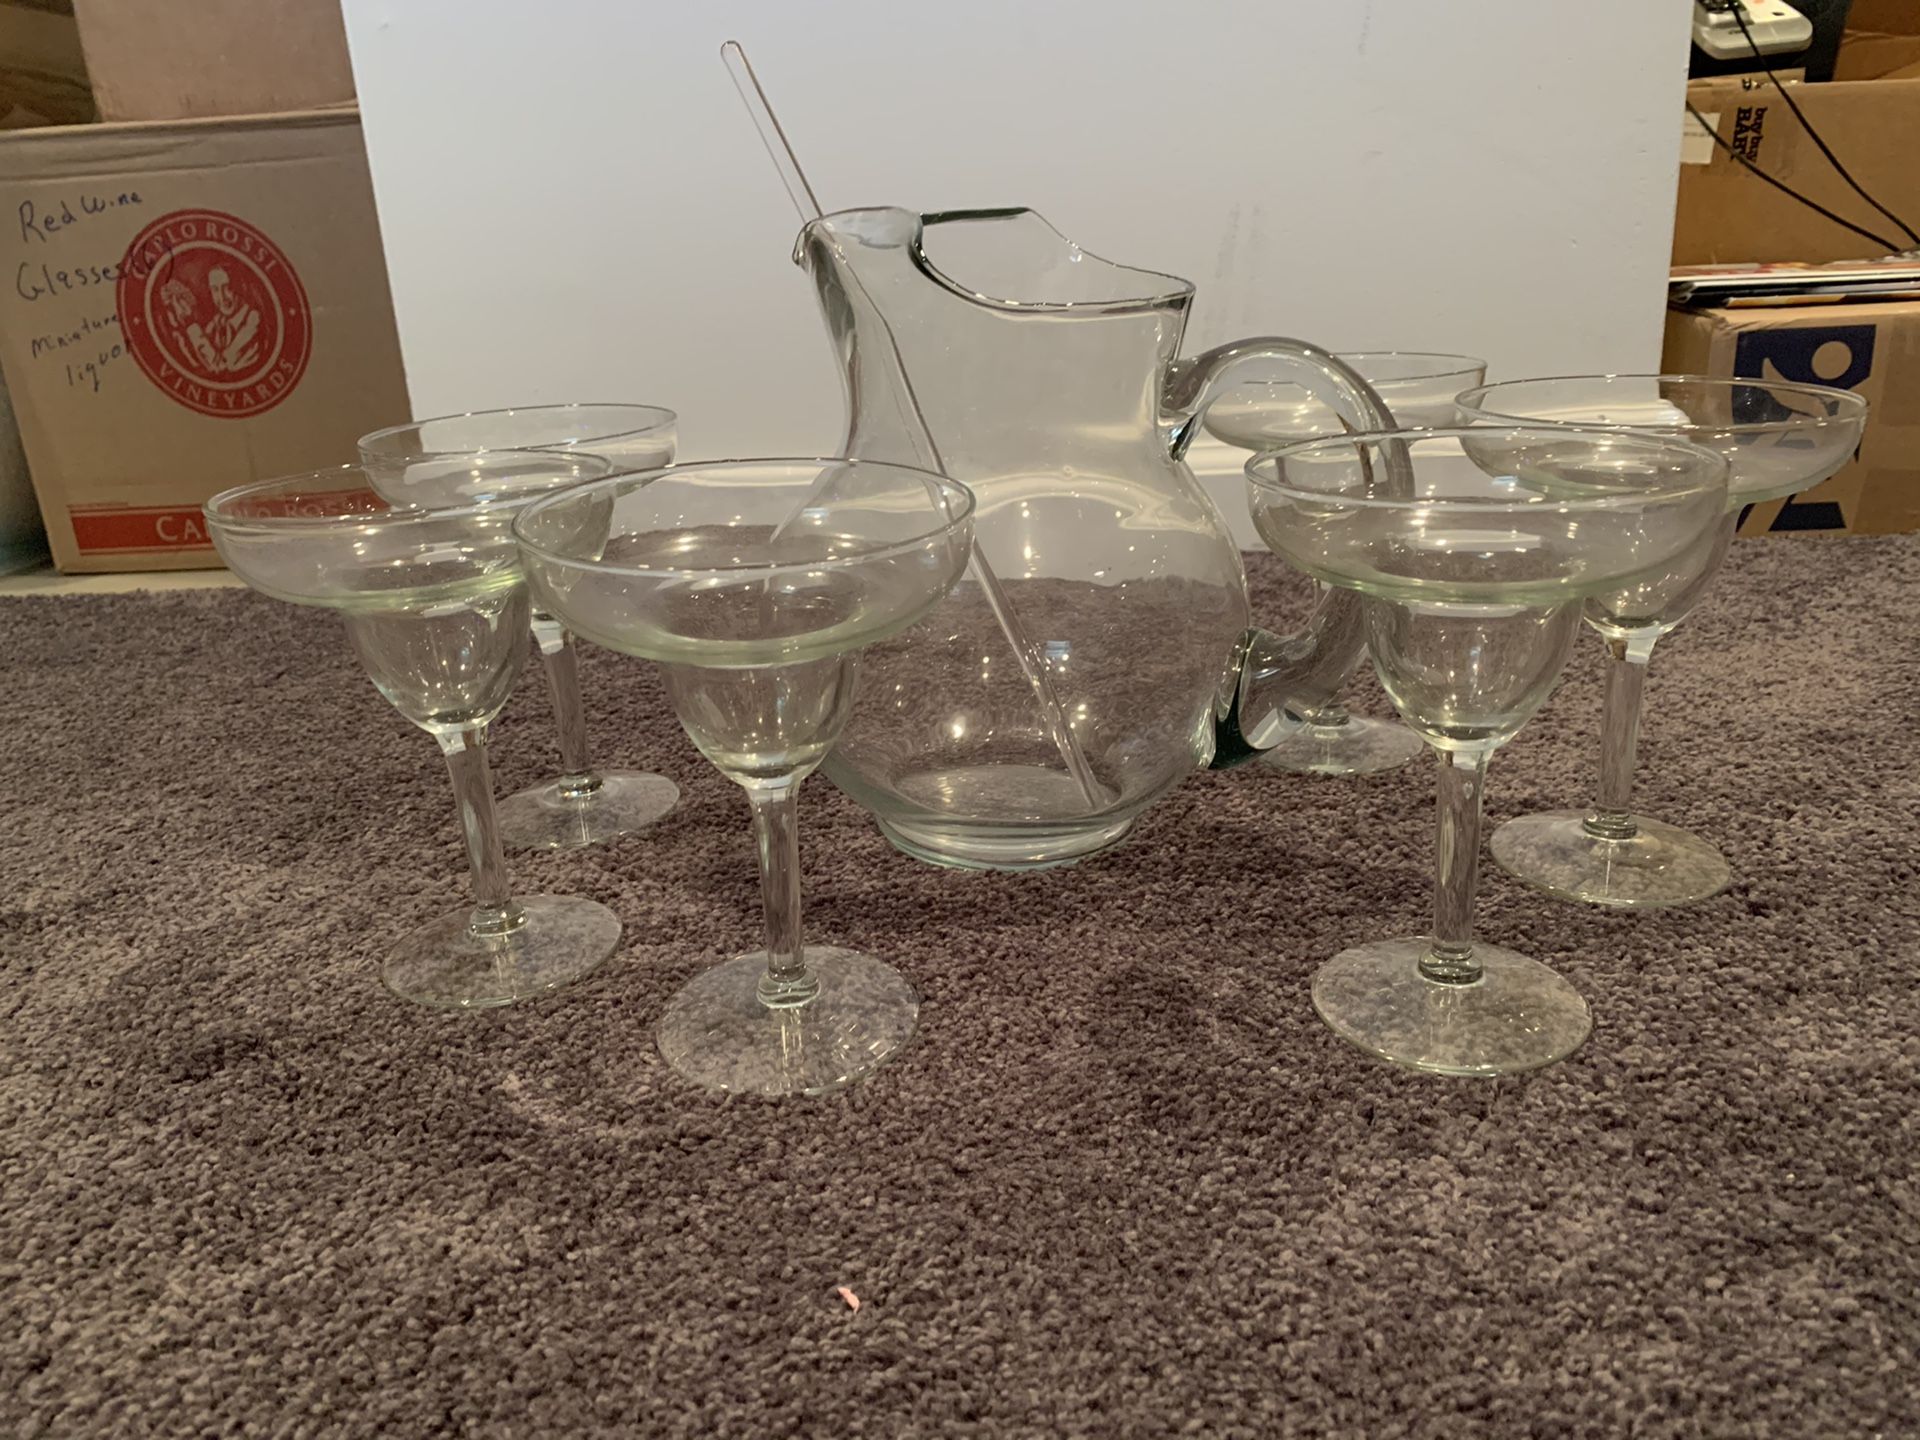 Margarita pitcher and glasses set